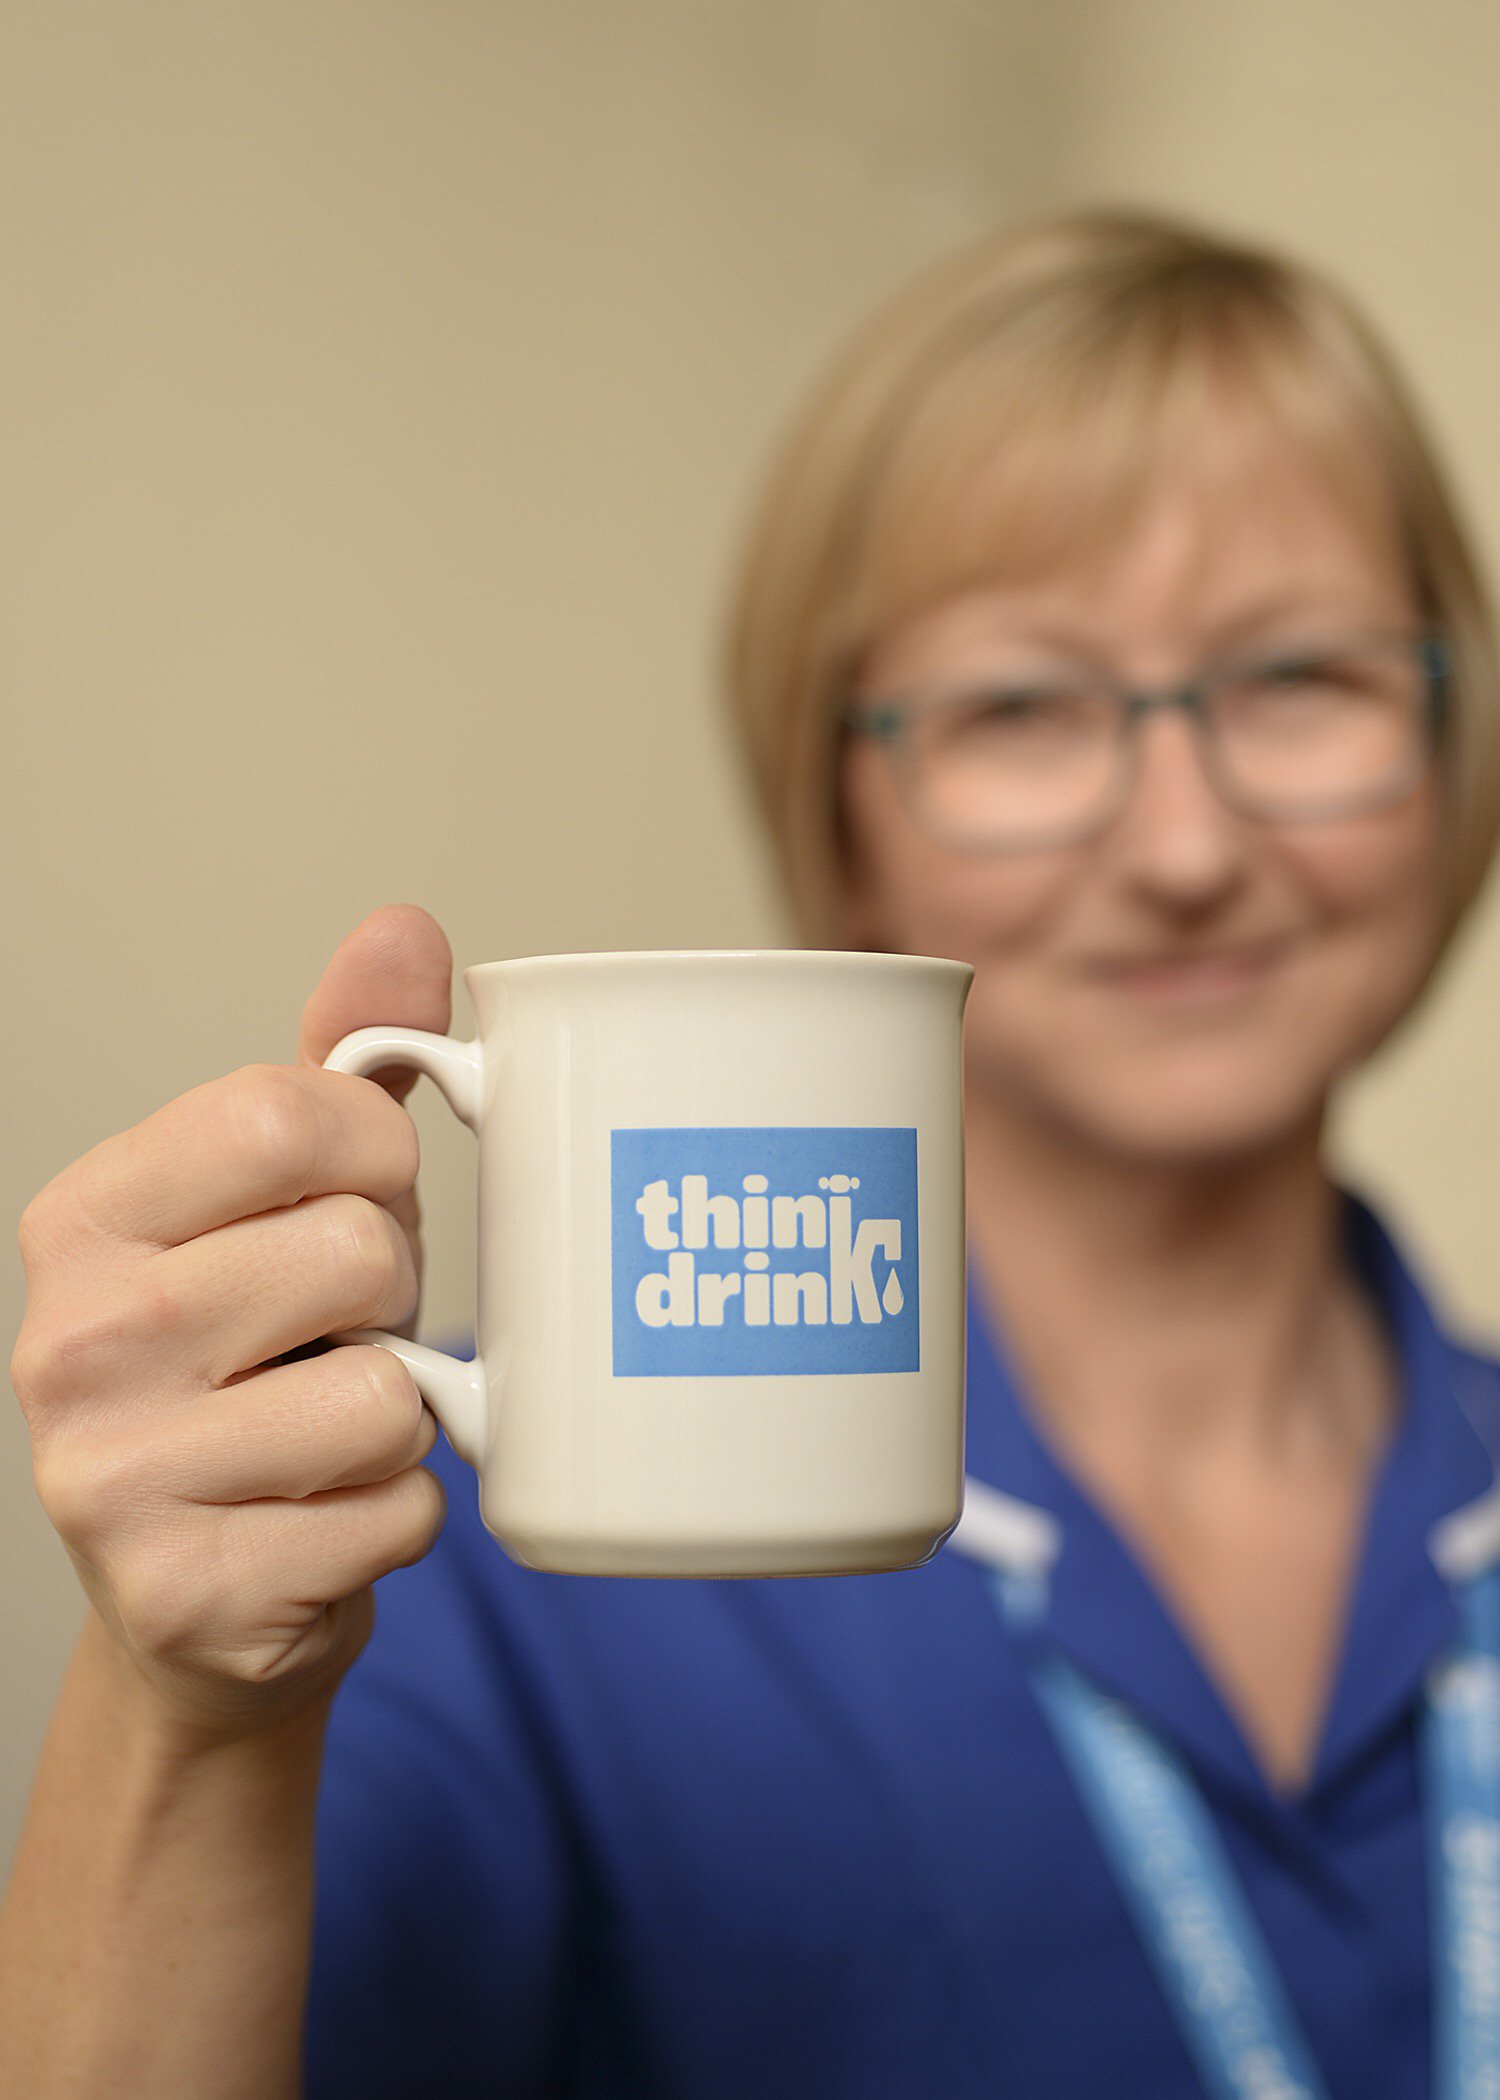 # JustDoIt - Raising a mug to ‘Think Drink’ featured image